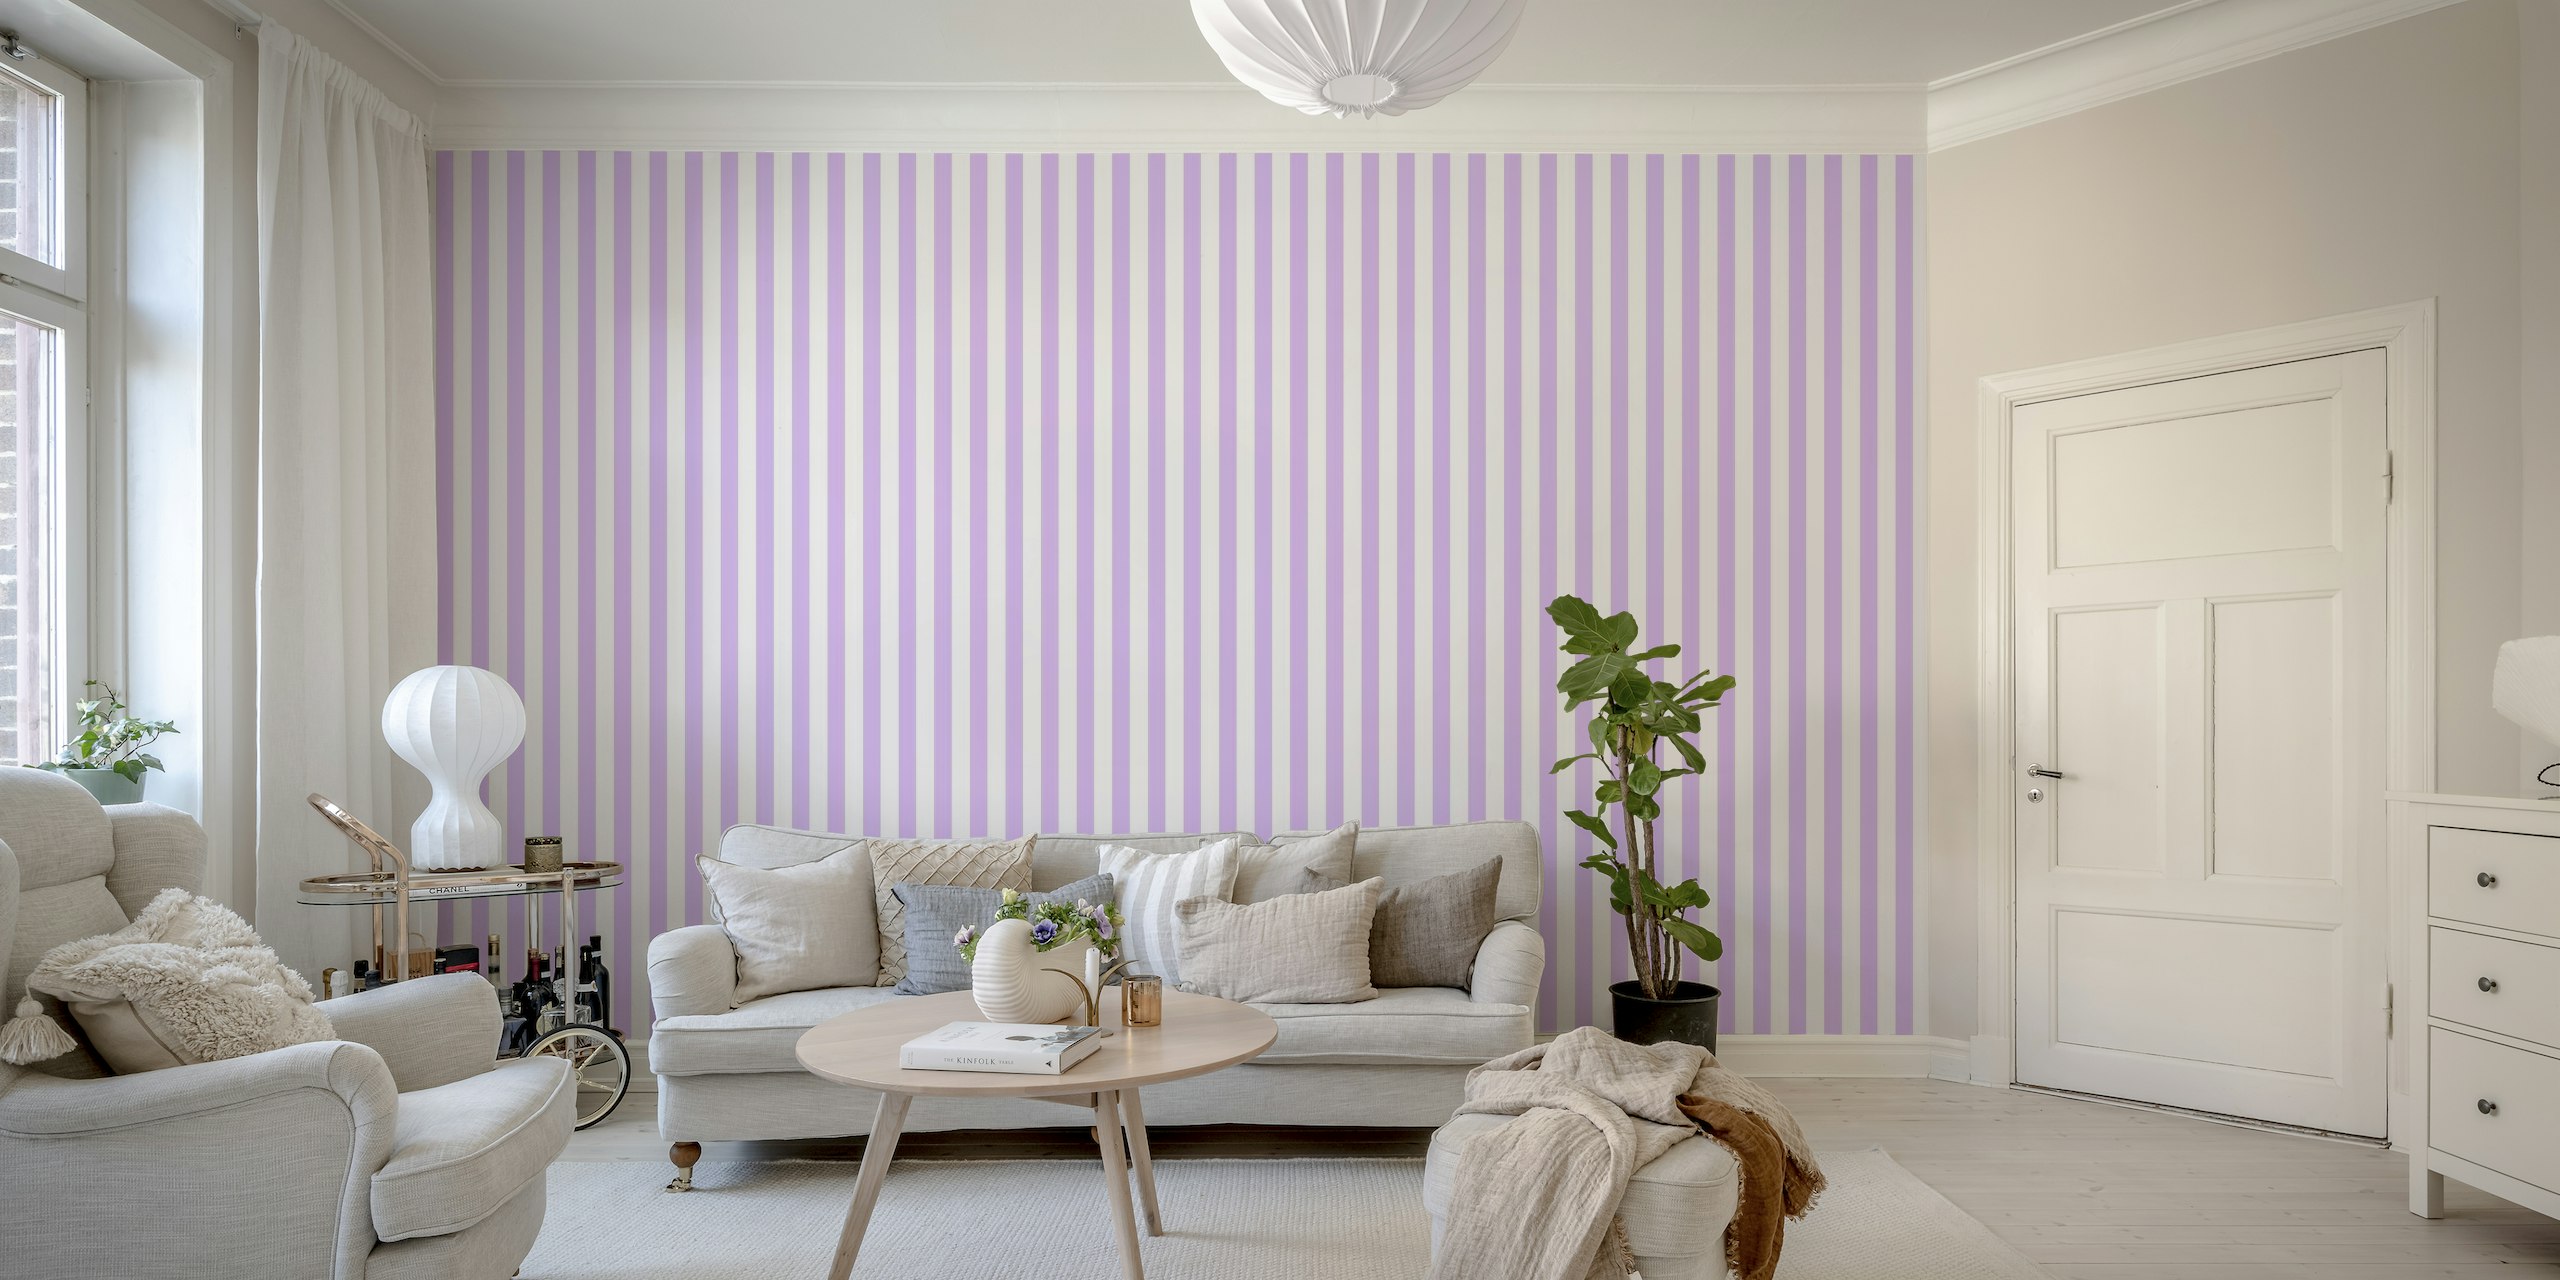 Lilac and white stripes carta da parati